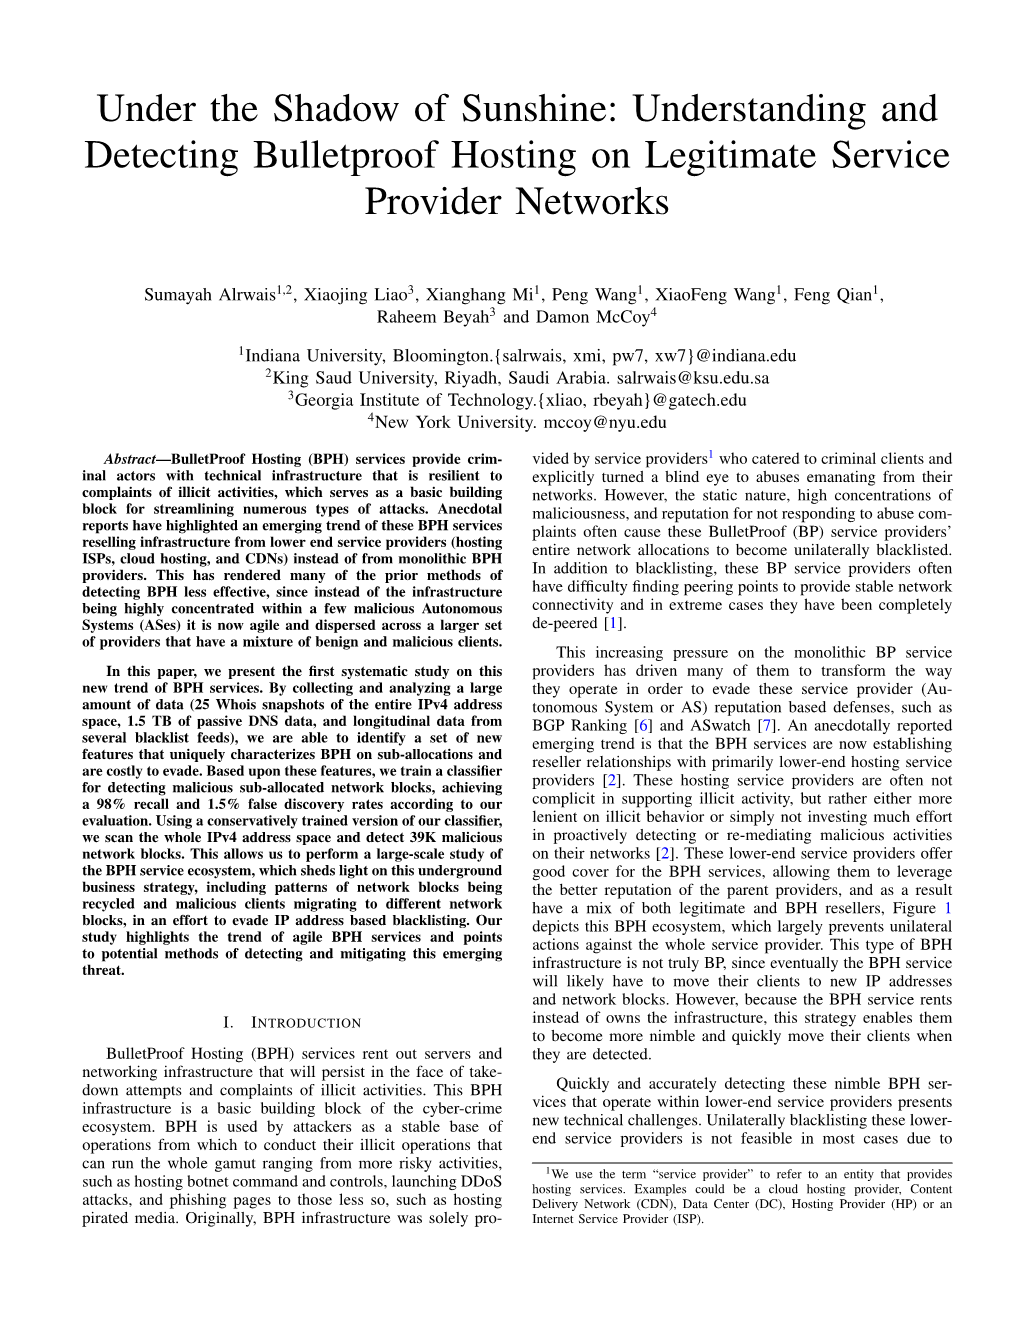 Understanding and Detecting Bulletproof Hosting on Legitimate Service Provider Networks